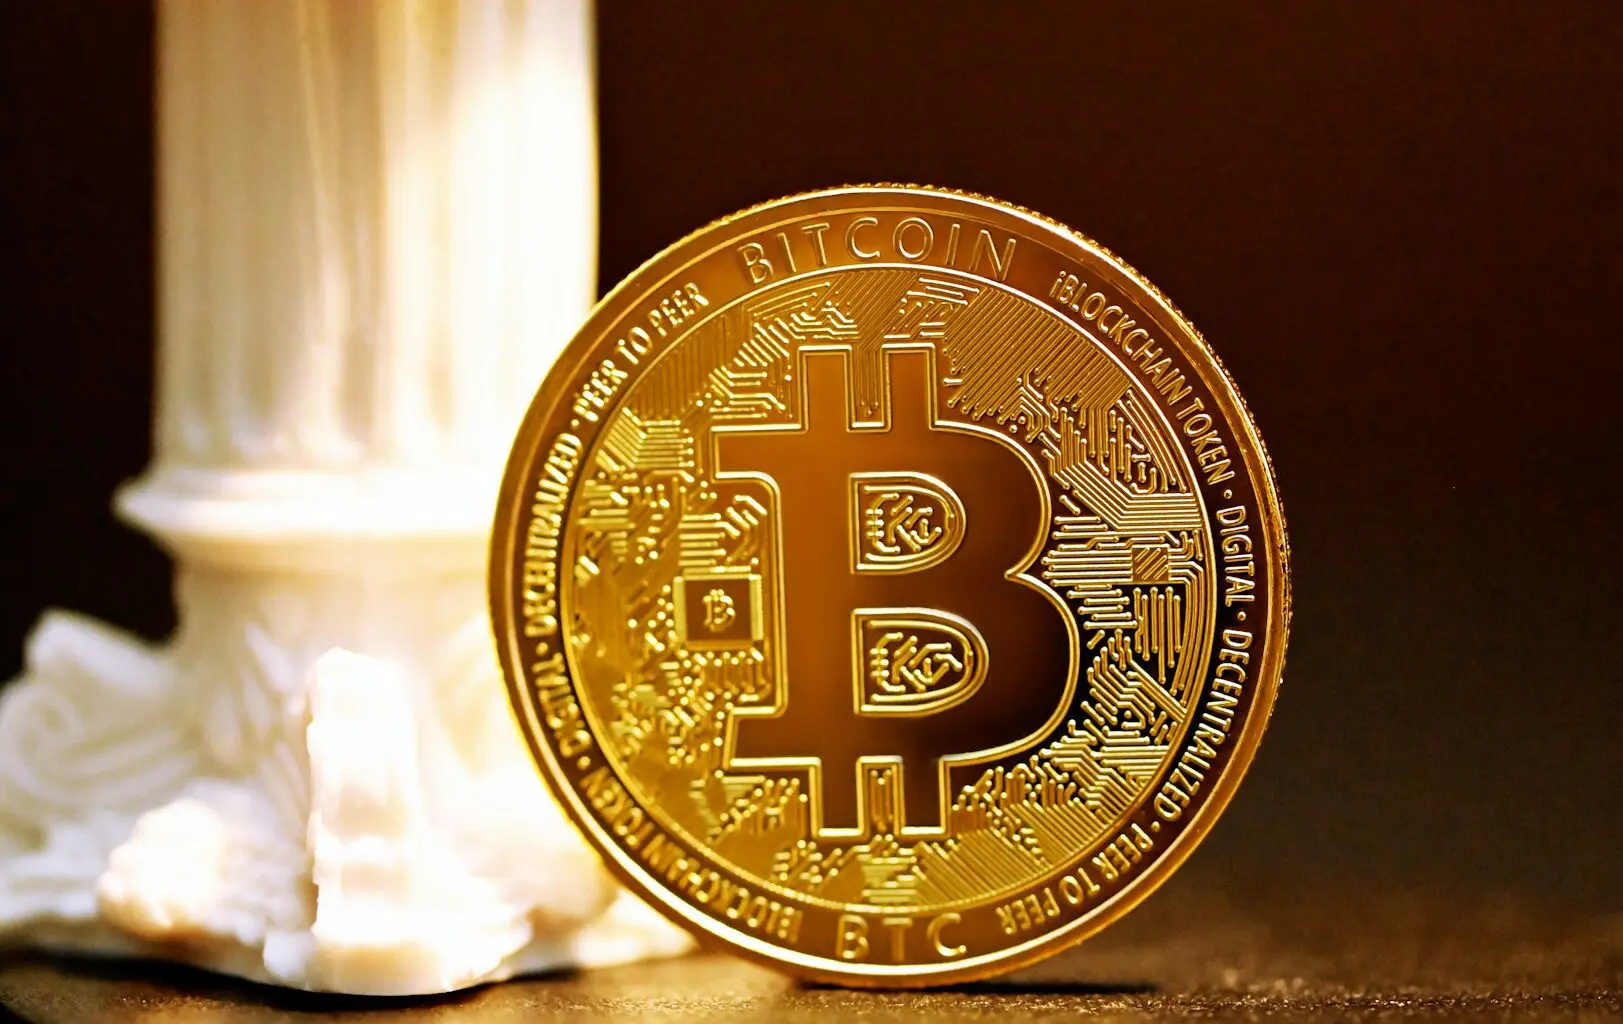 An image of a physical "Bitcoin", representing the crypto coin.